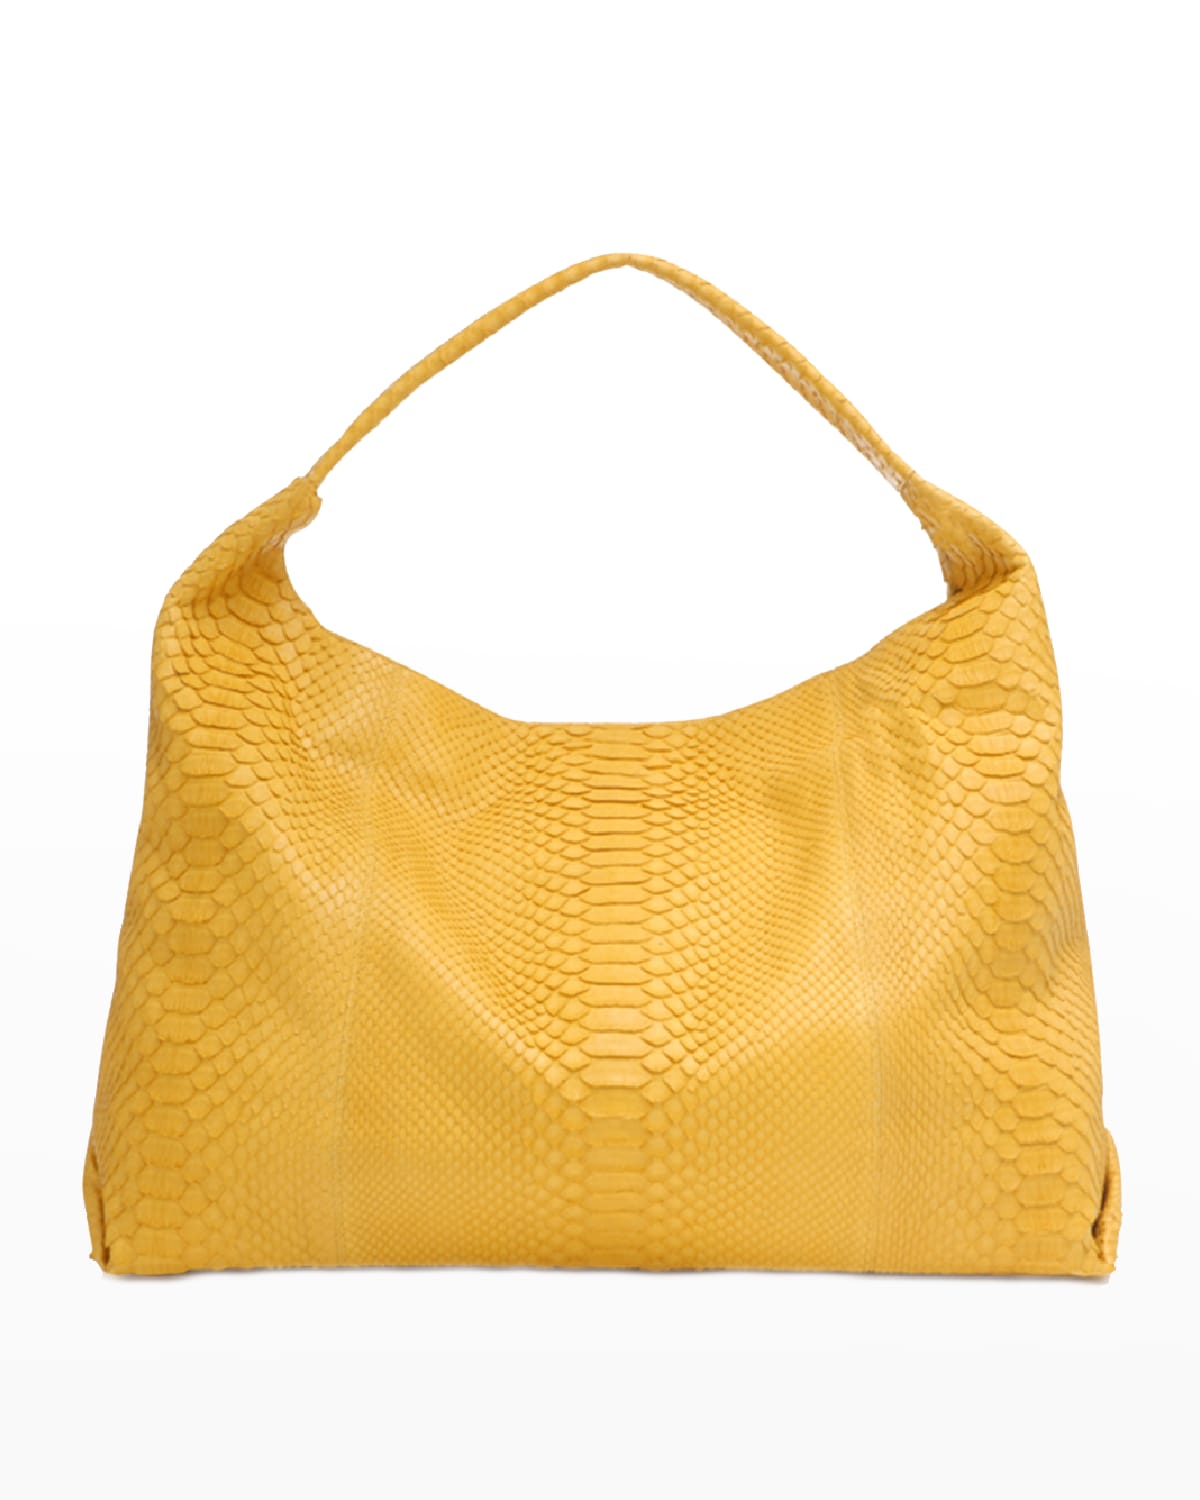 Adriana Castro Meissa Python Hobo Shoulder Bag In Pineapple Yellow